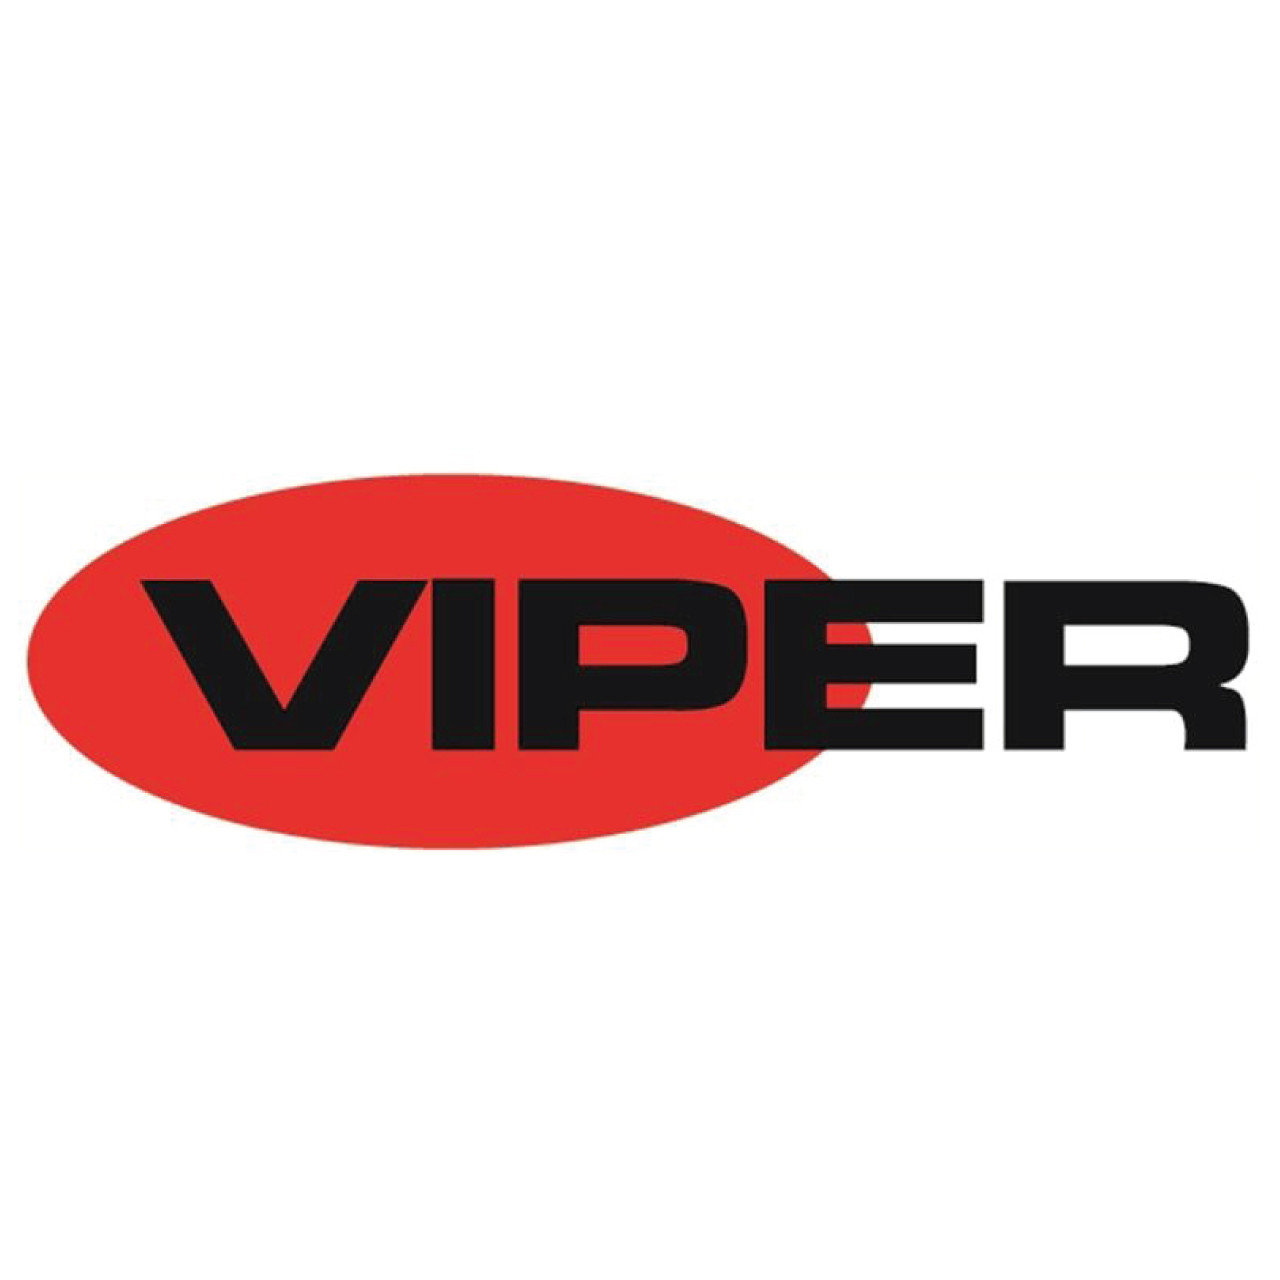 VIPER EQUIPMENT PART # 4084001377 PRESSURE REGULATOR VHC1 PICTURE